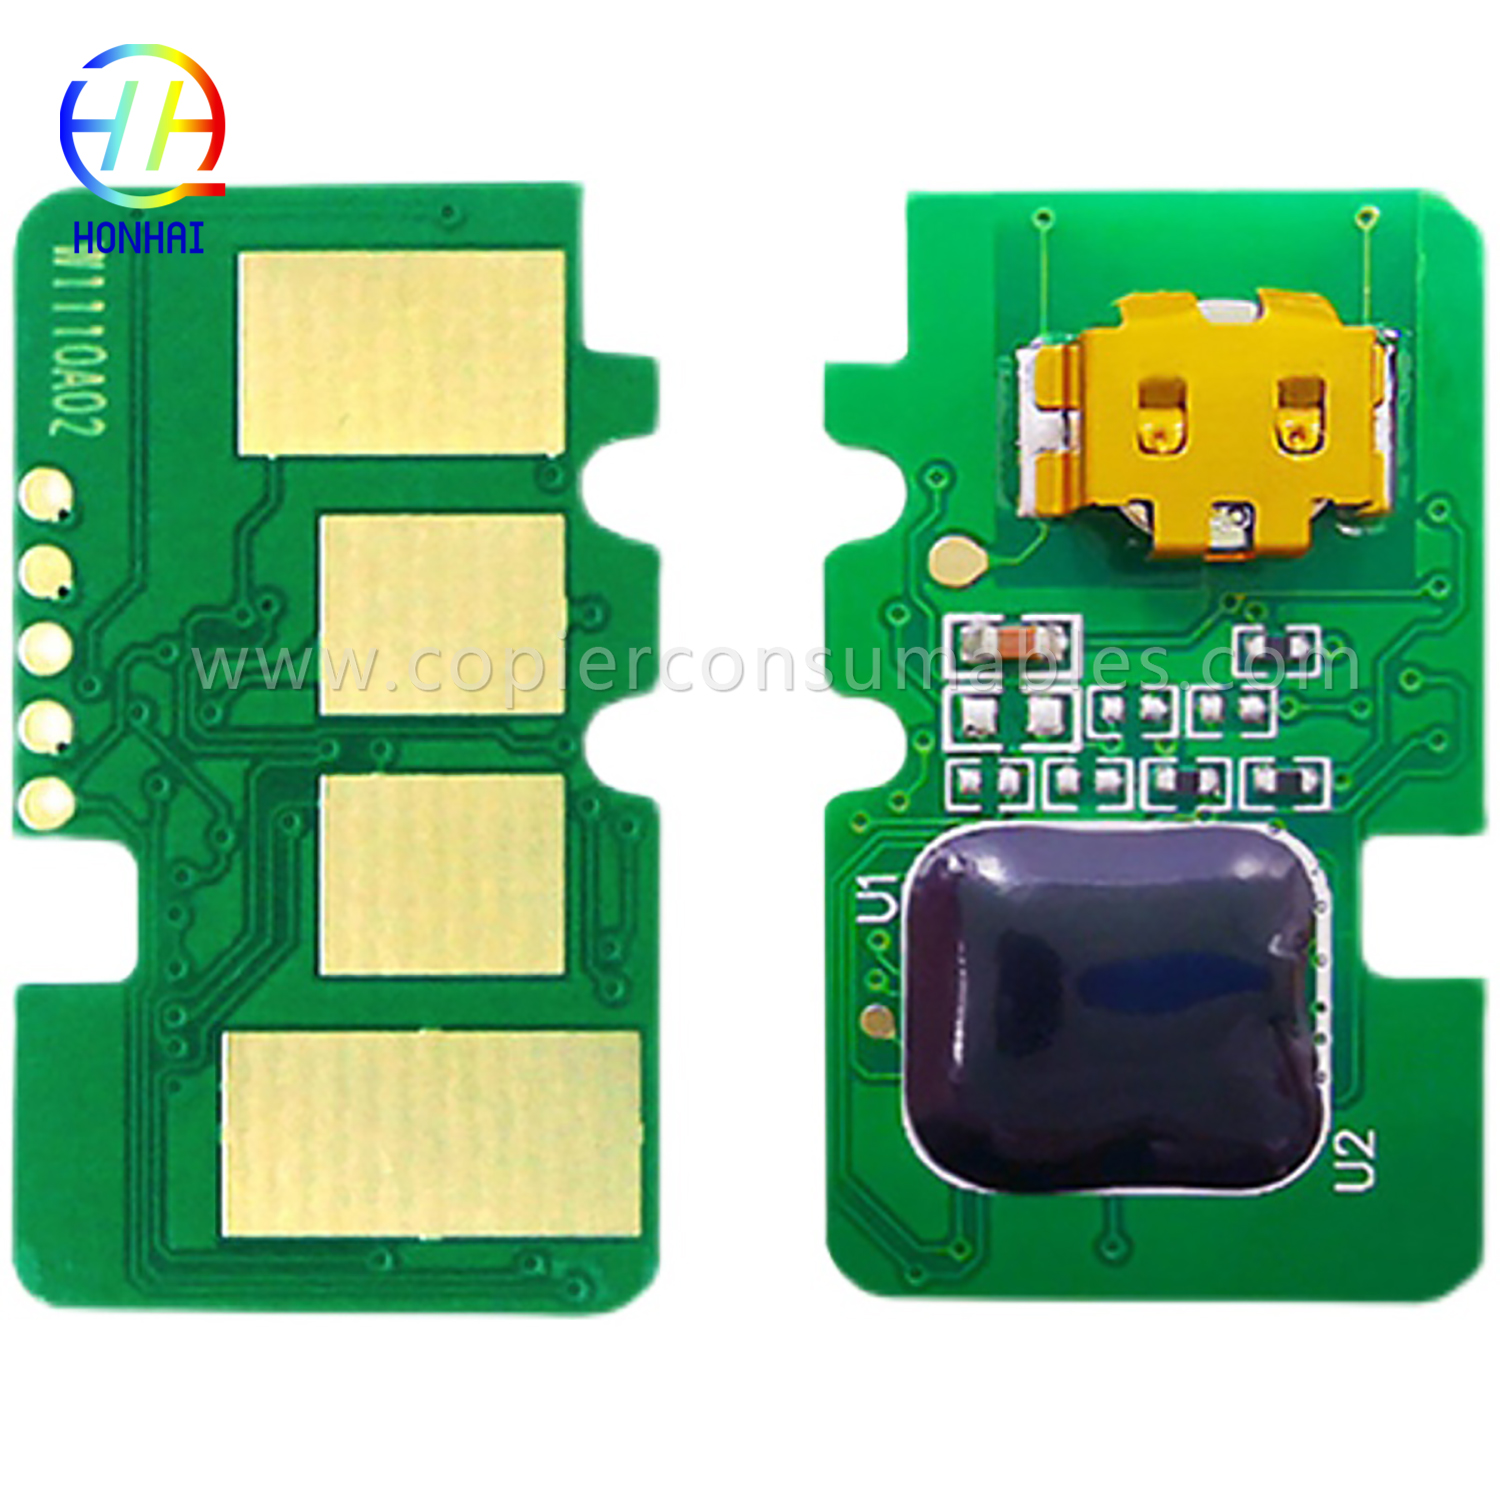 Tinte cartridge Chip pro Samsung Mlt-D111s Exp